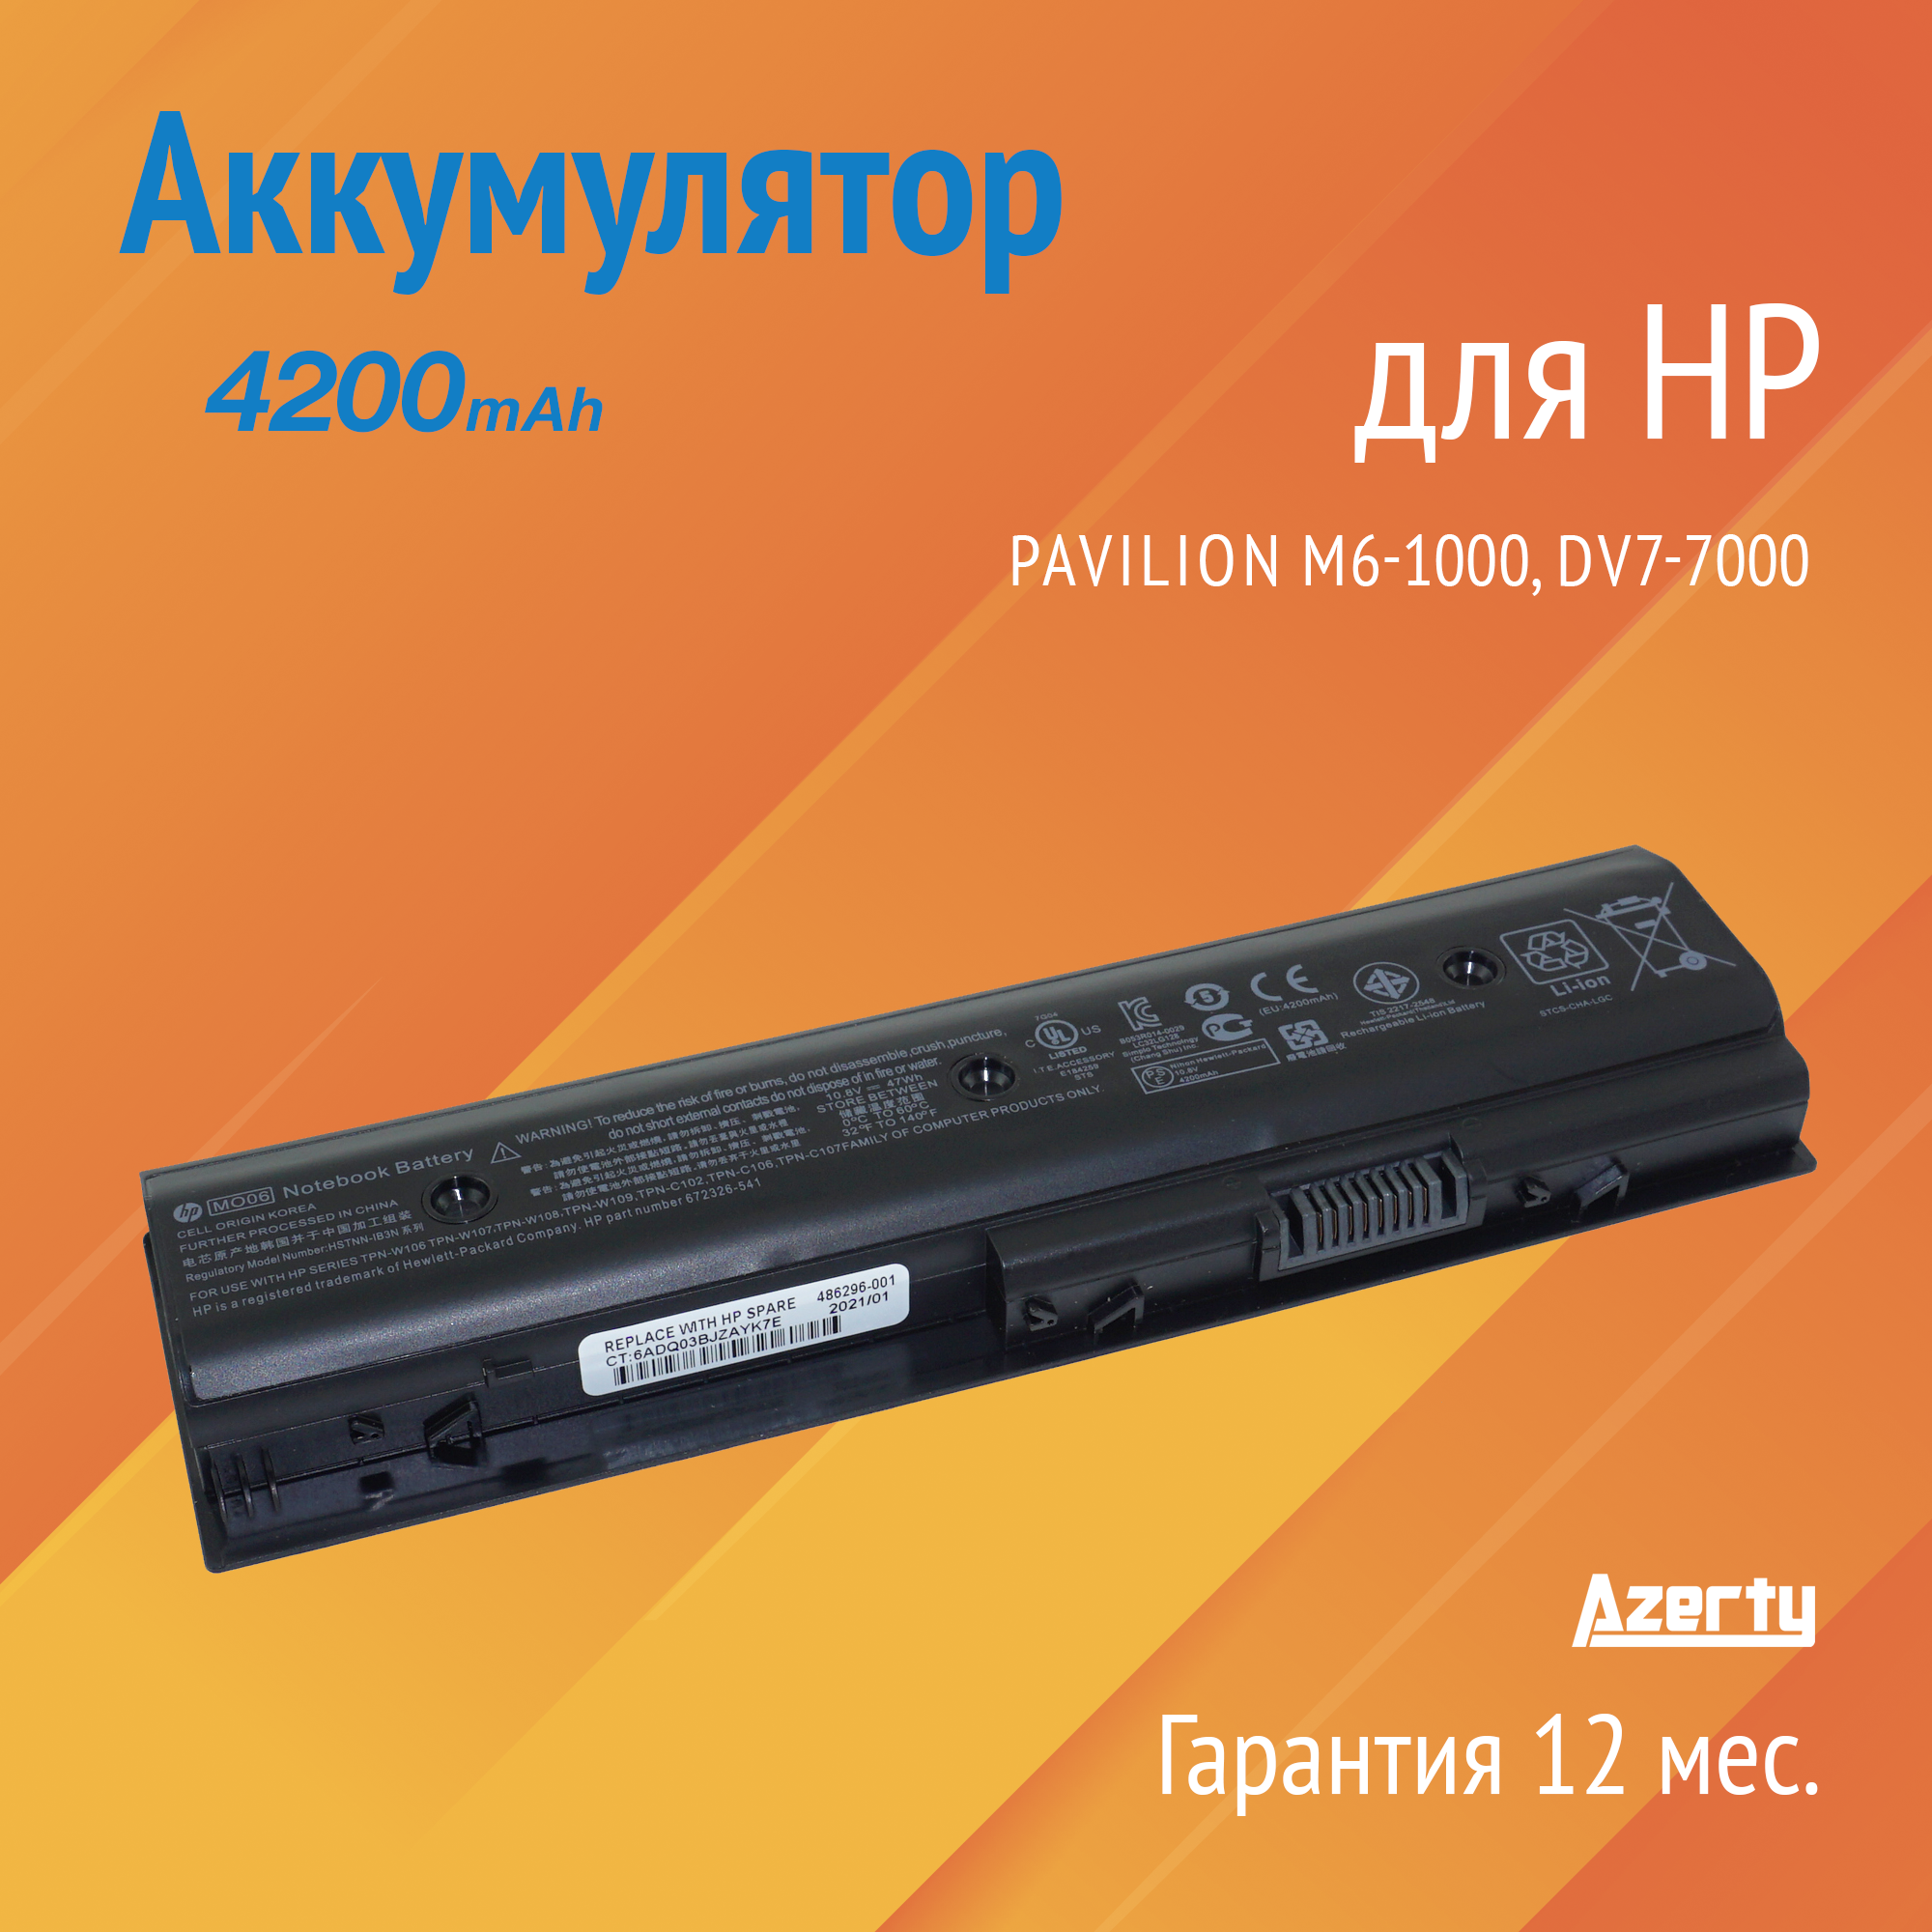 Аккумулятор HSTNN-YB3N для HP Pavilion m6-1000 / dv7-7000 (672412-001, CL2108B.806, H2L55AA)